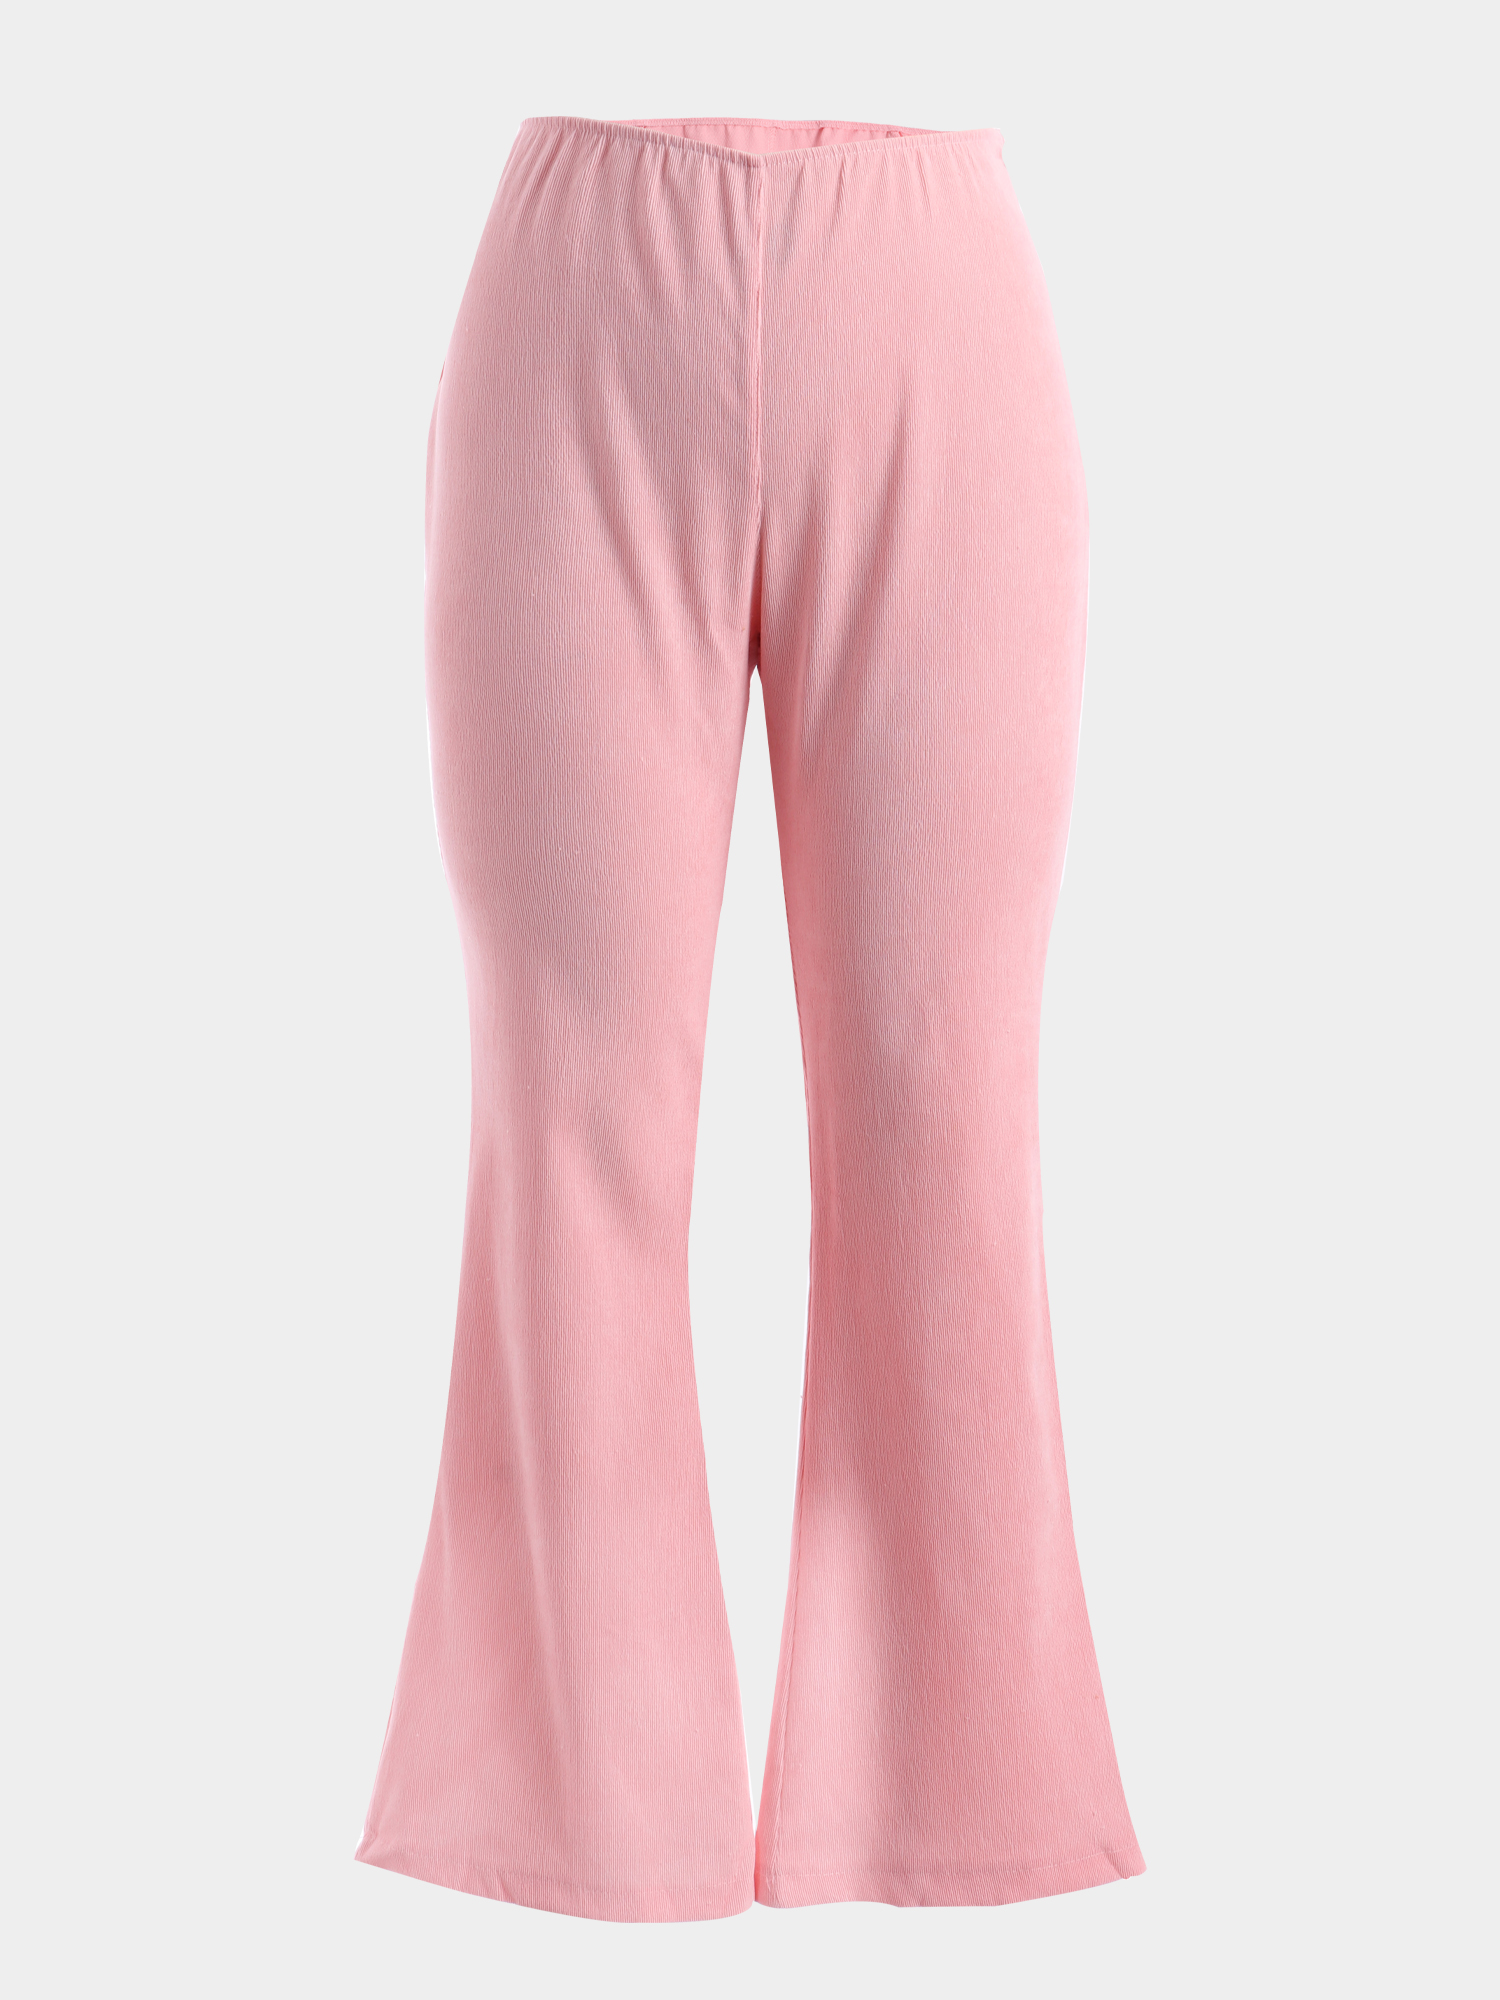 Midsize Chic Flare Corduroy Pants Pink | Hemwave - Midsize Fashion